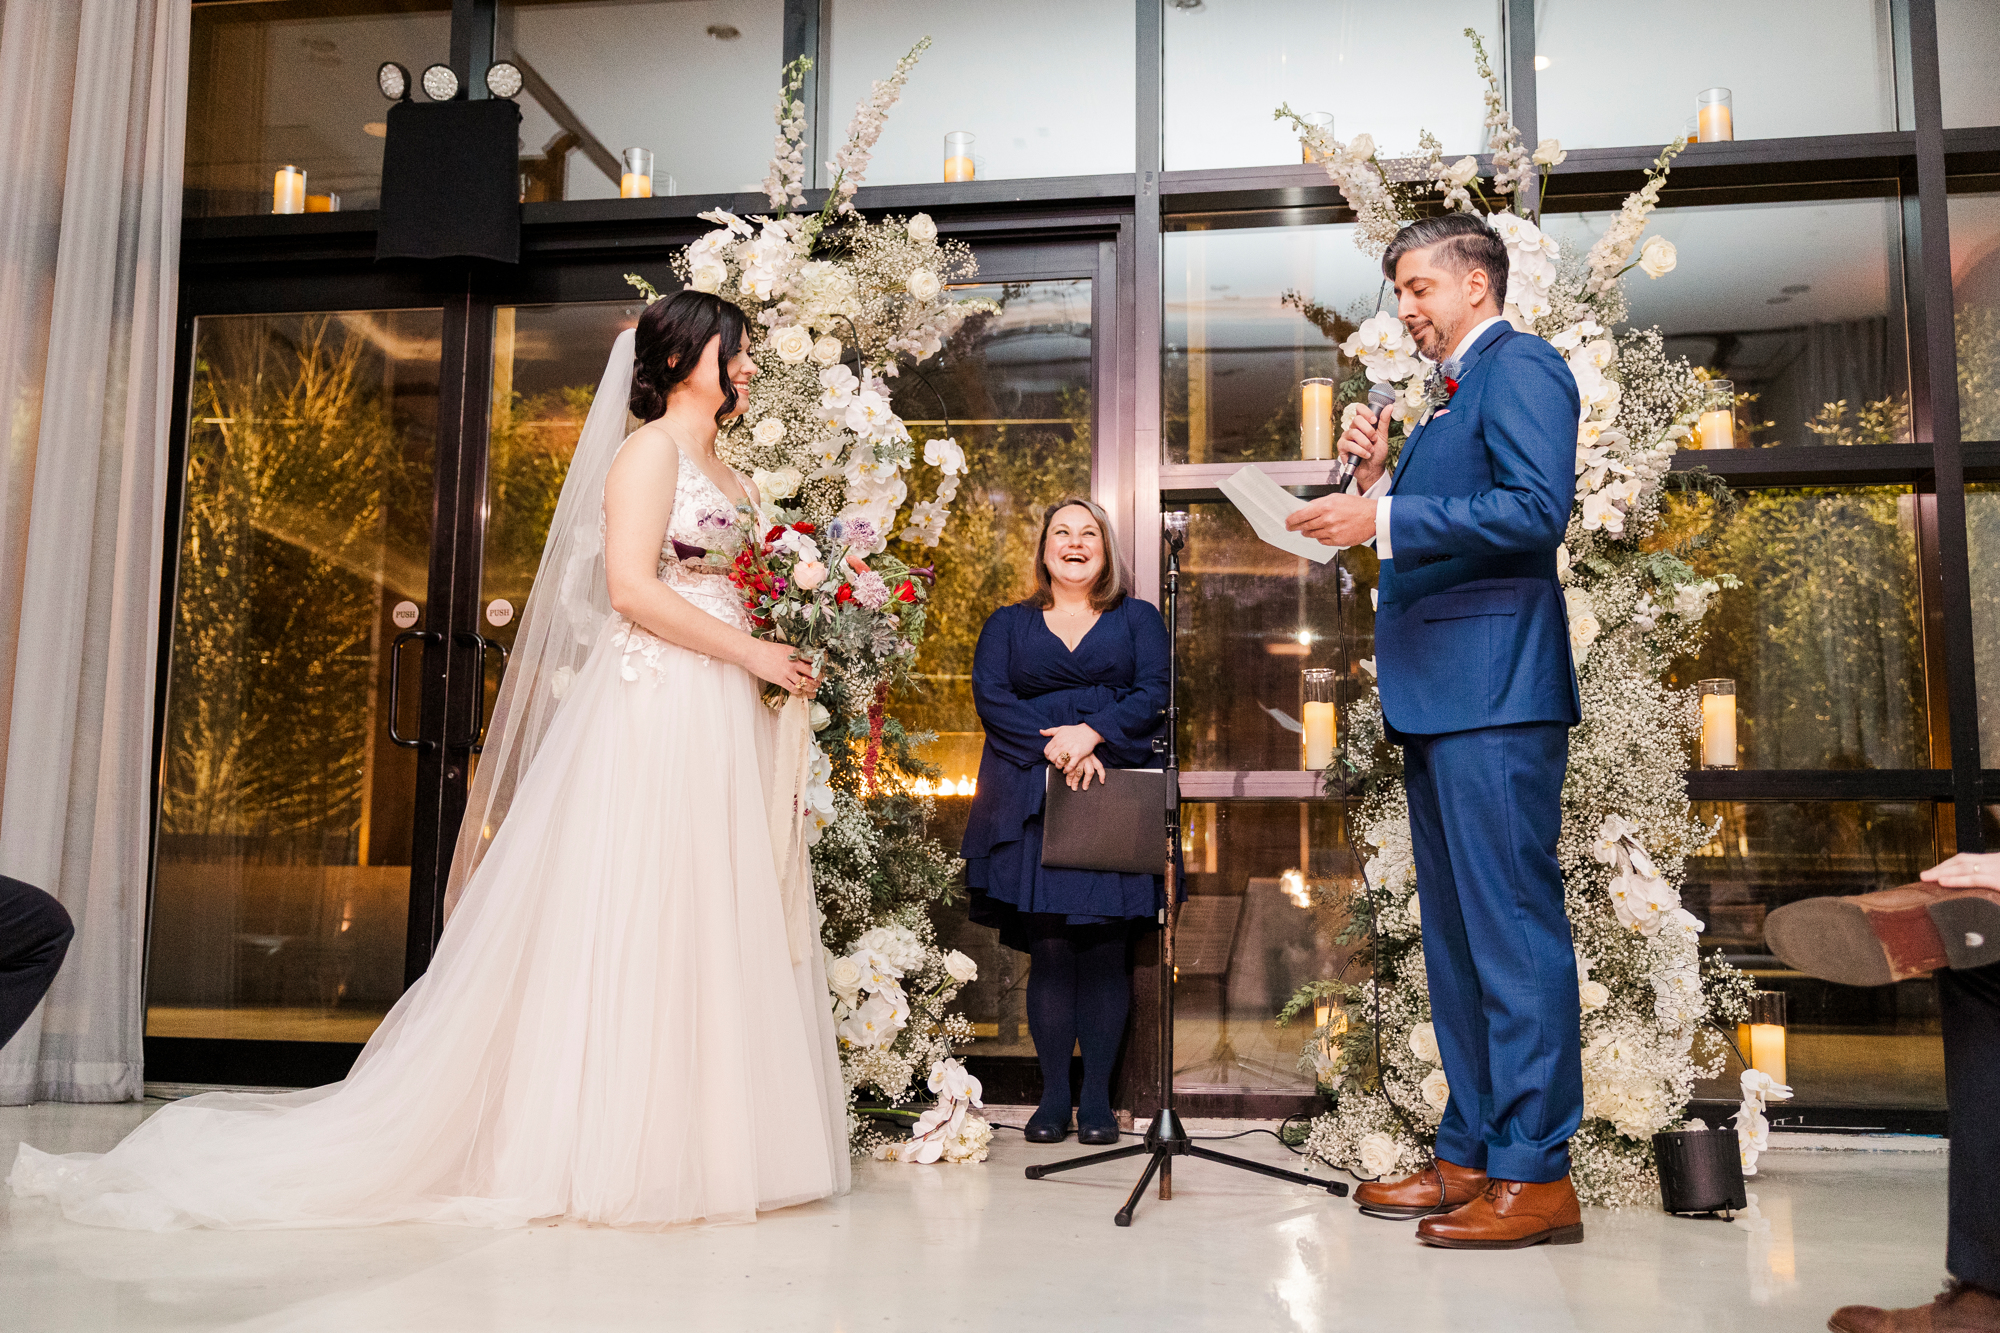 Vibrant Wedding Ceremony at the Ravel Hotel, NYC